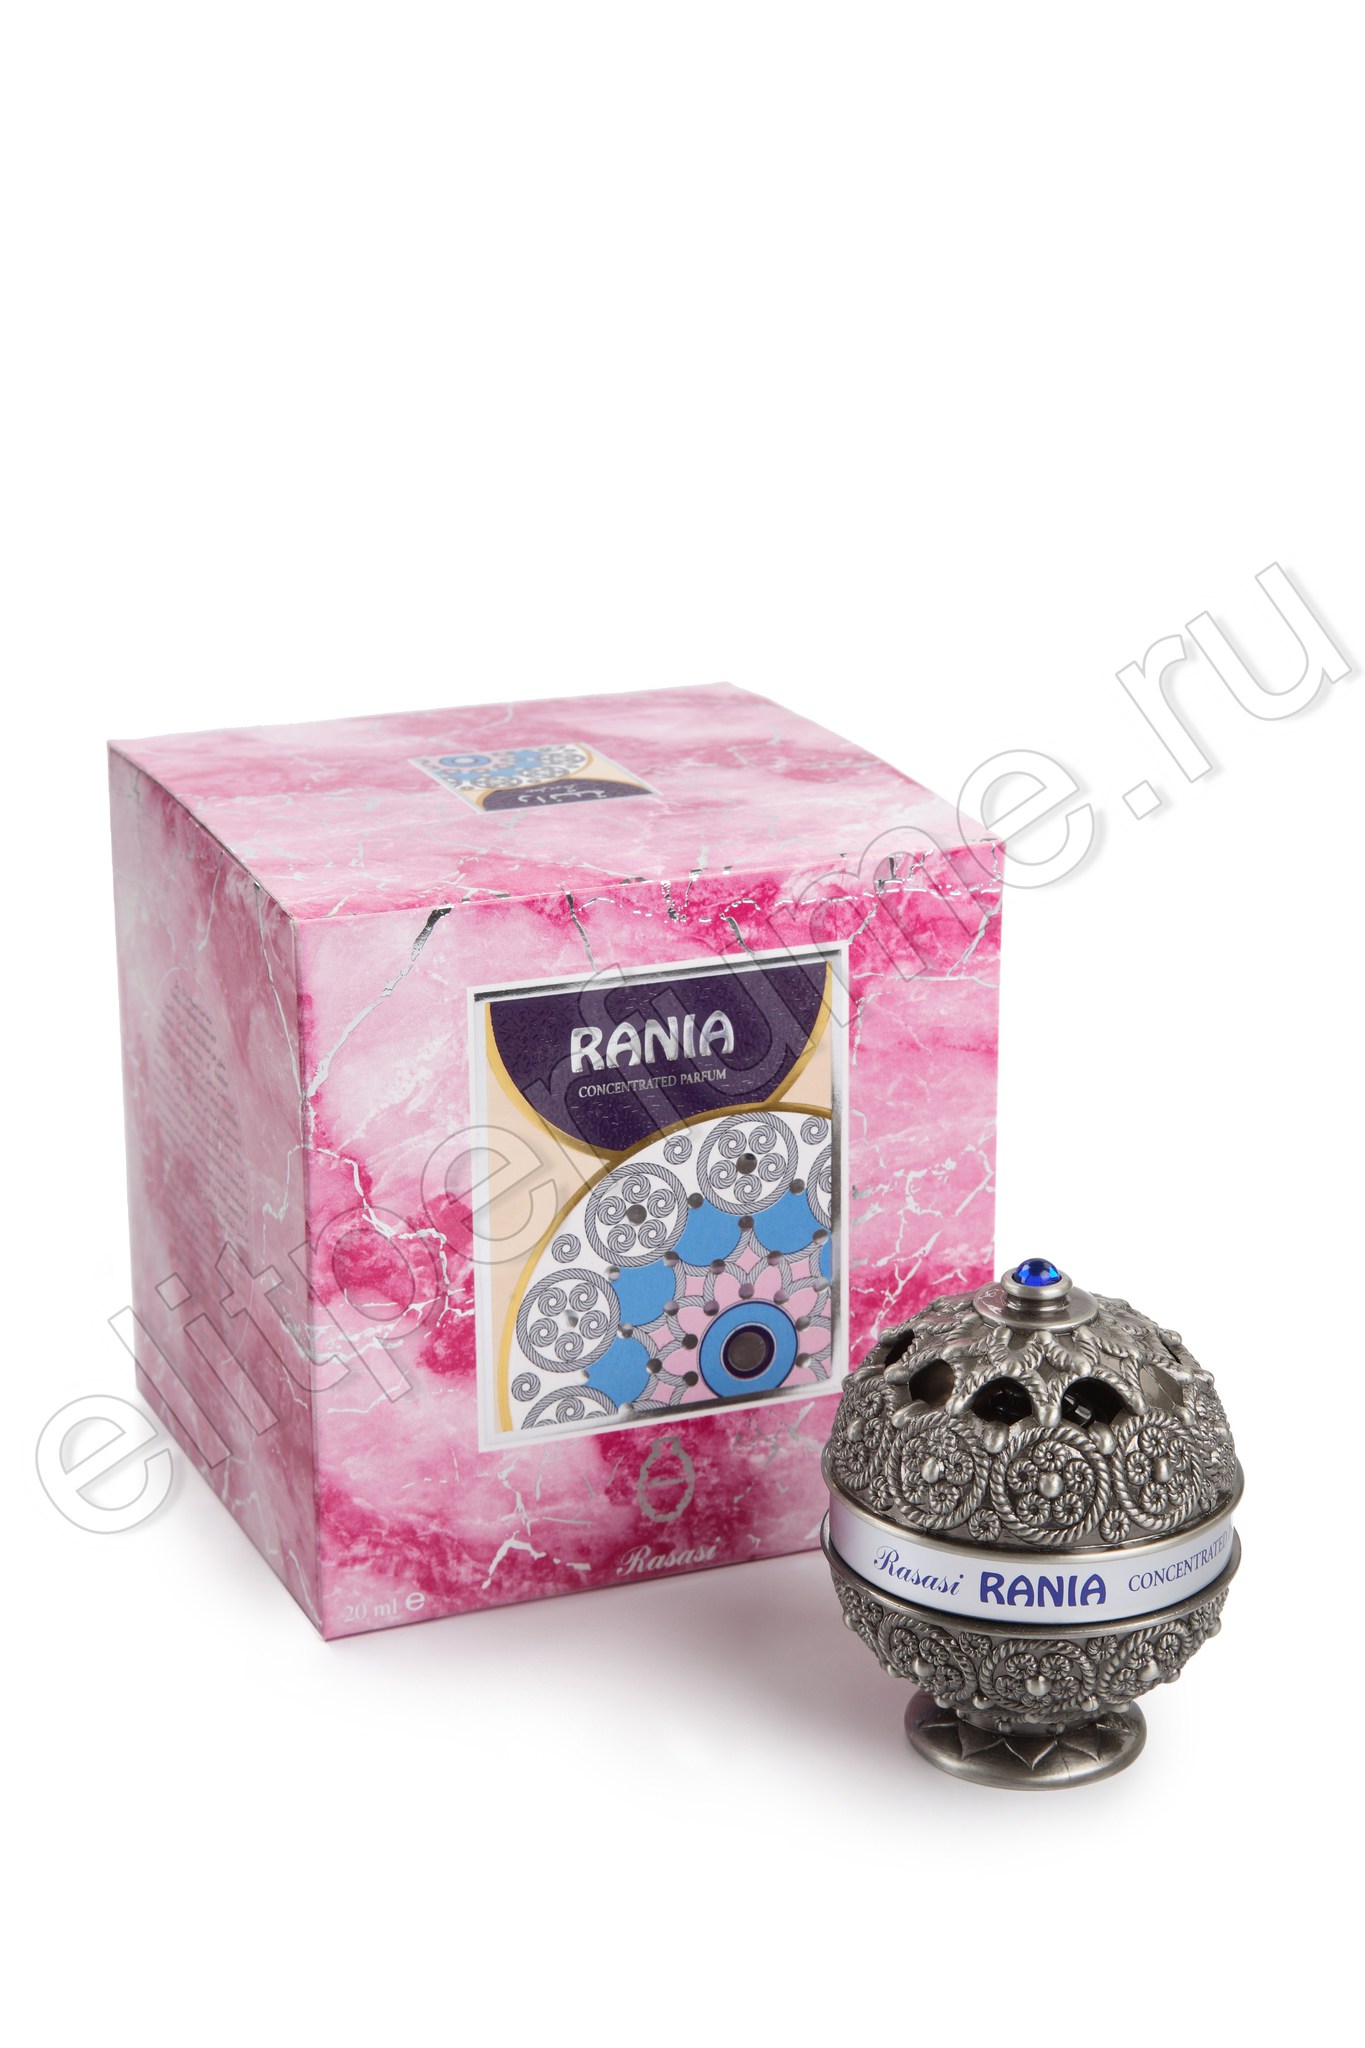 Рания Rania 20 мл арабские масляные духи от Расаси Rasasi Perfumes